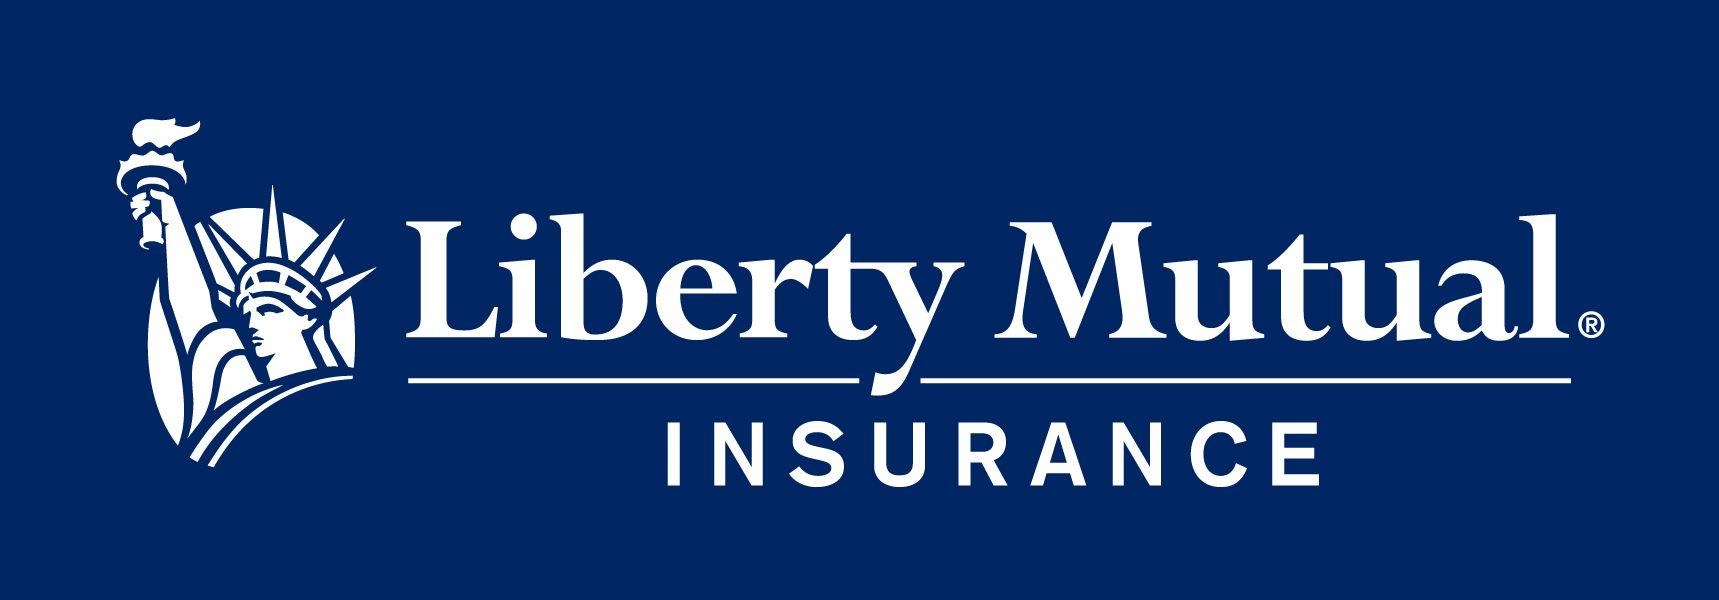 Liberty Mutual Company Logo - Citizens Insurance Agency We Represent